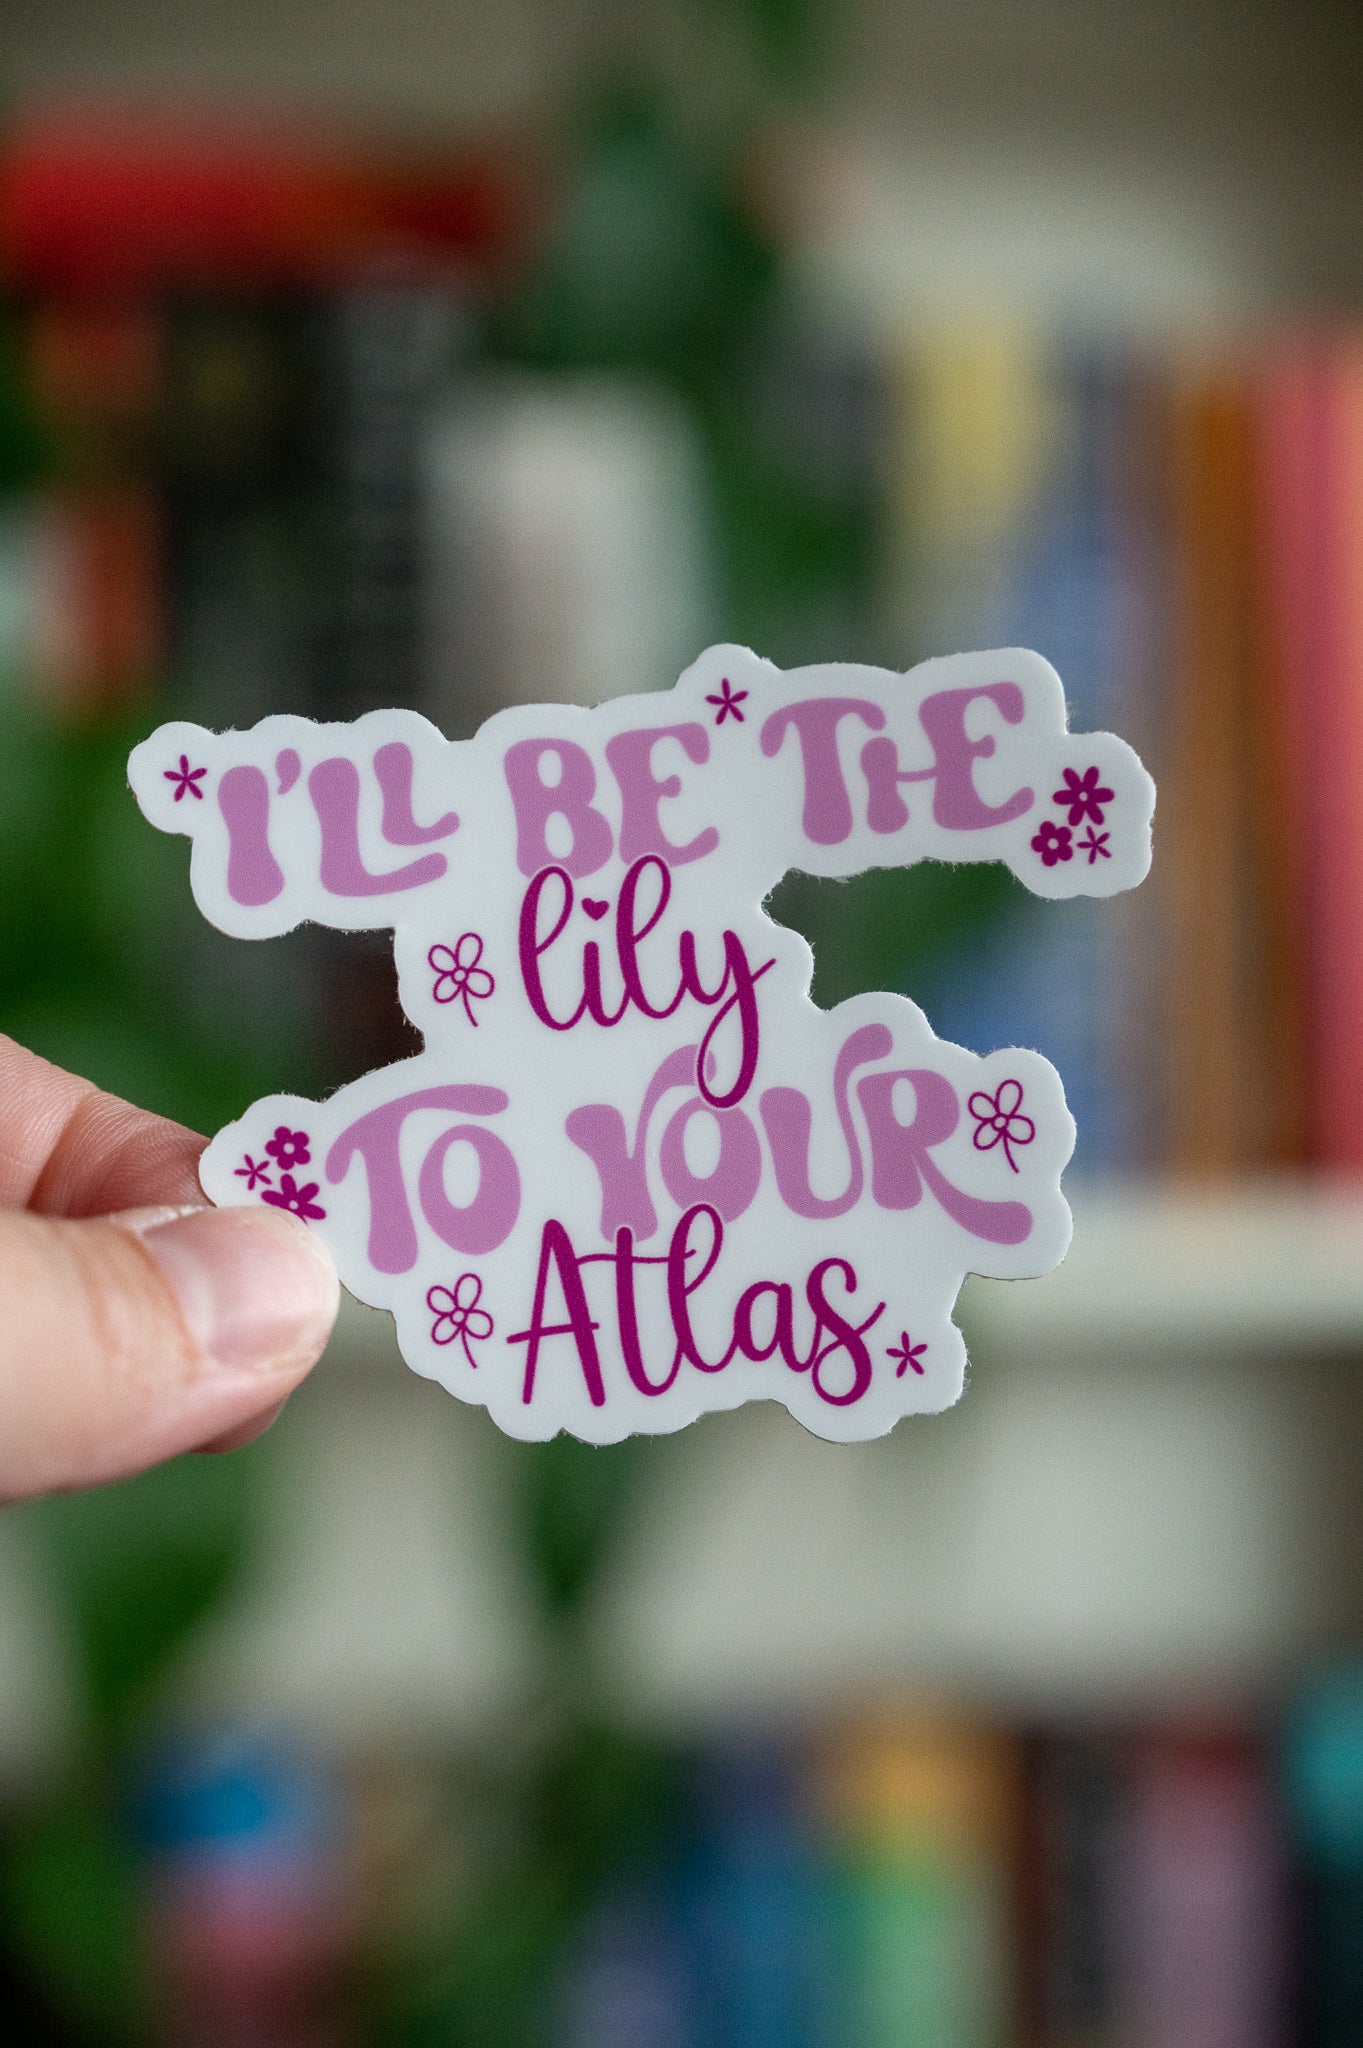 Lily and Atlas Vinyl Sticker